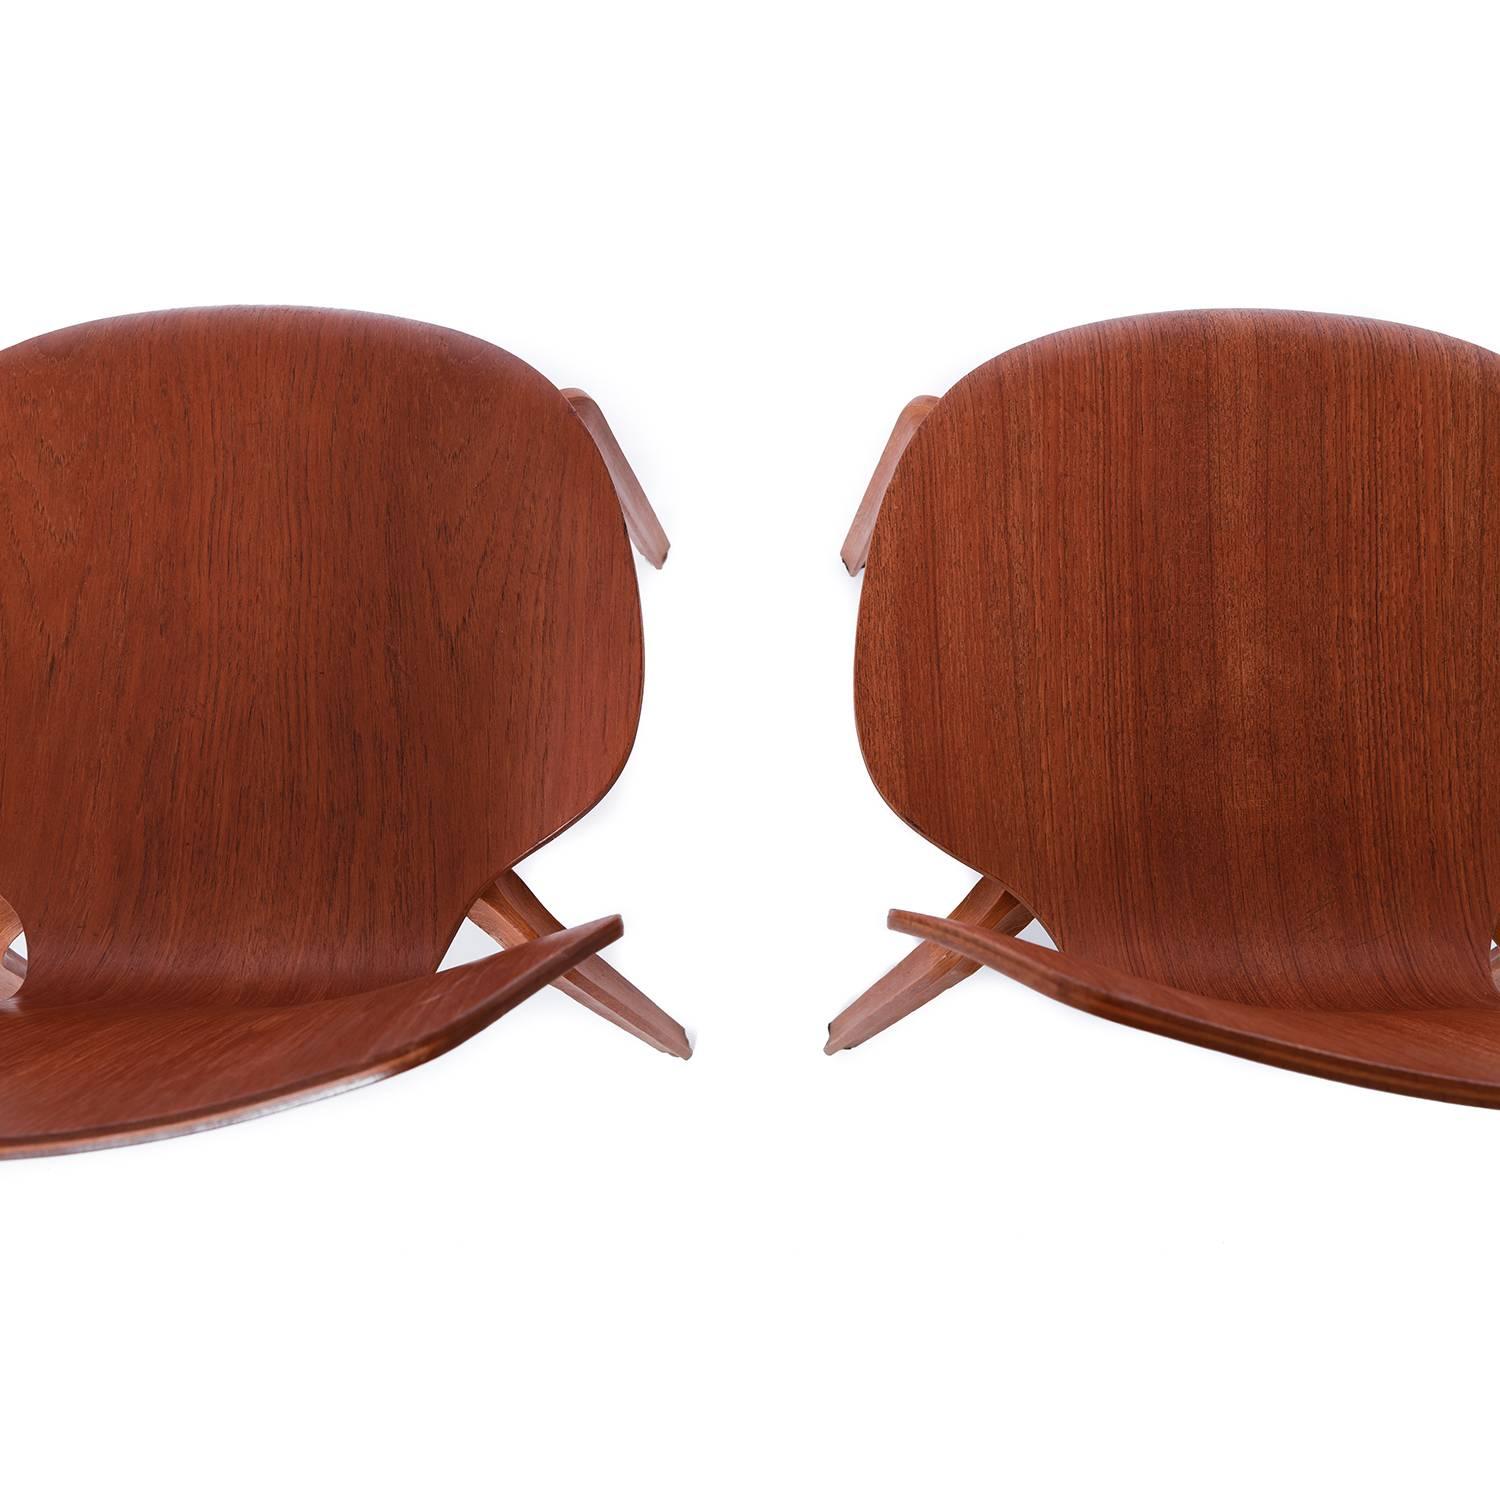 Oiled Danish Modern Grand Prix Chairs by Arne Jacobsen